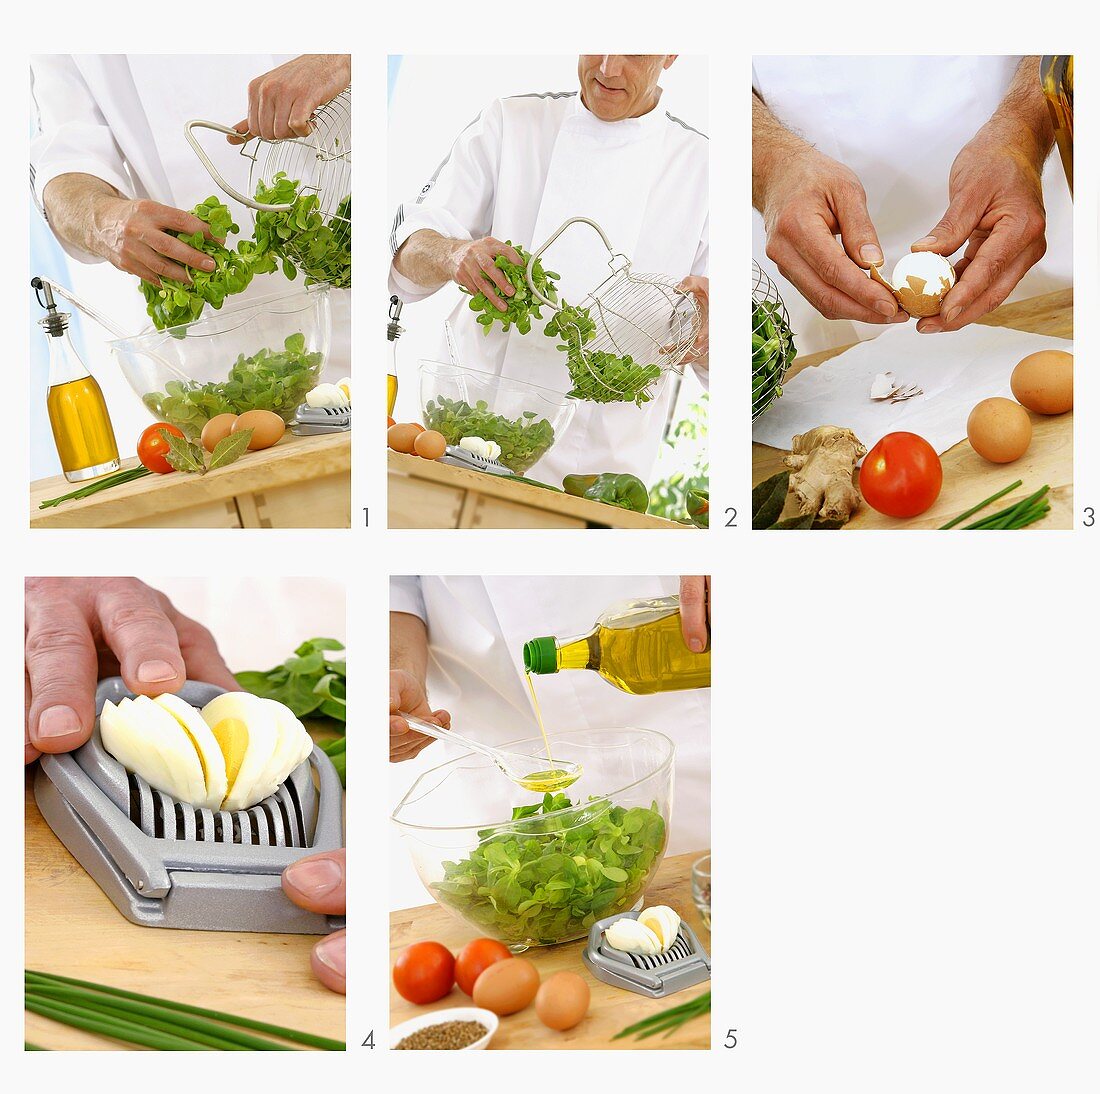 Koch bereitet Feldsalat mit gekochten Eiern zu